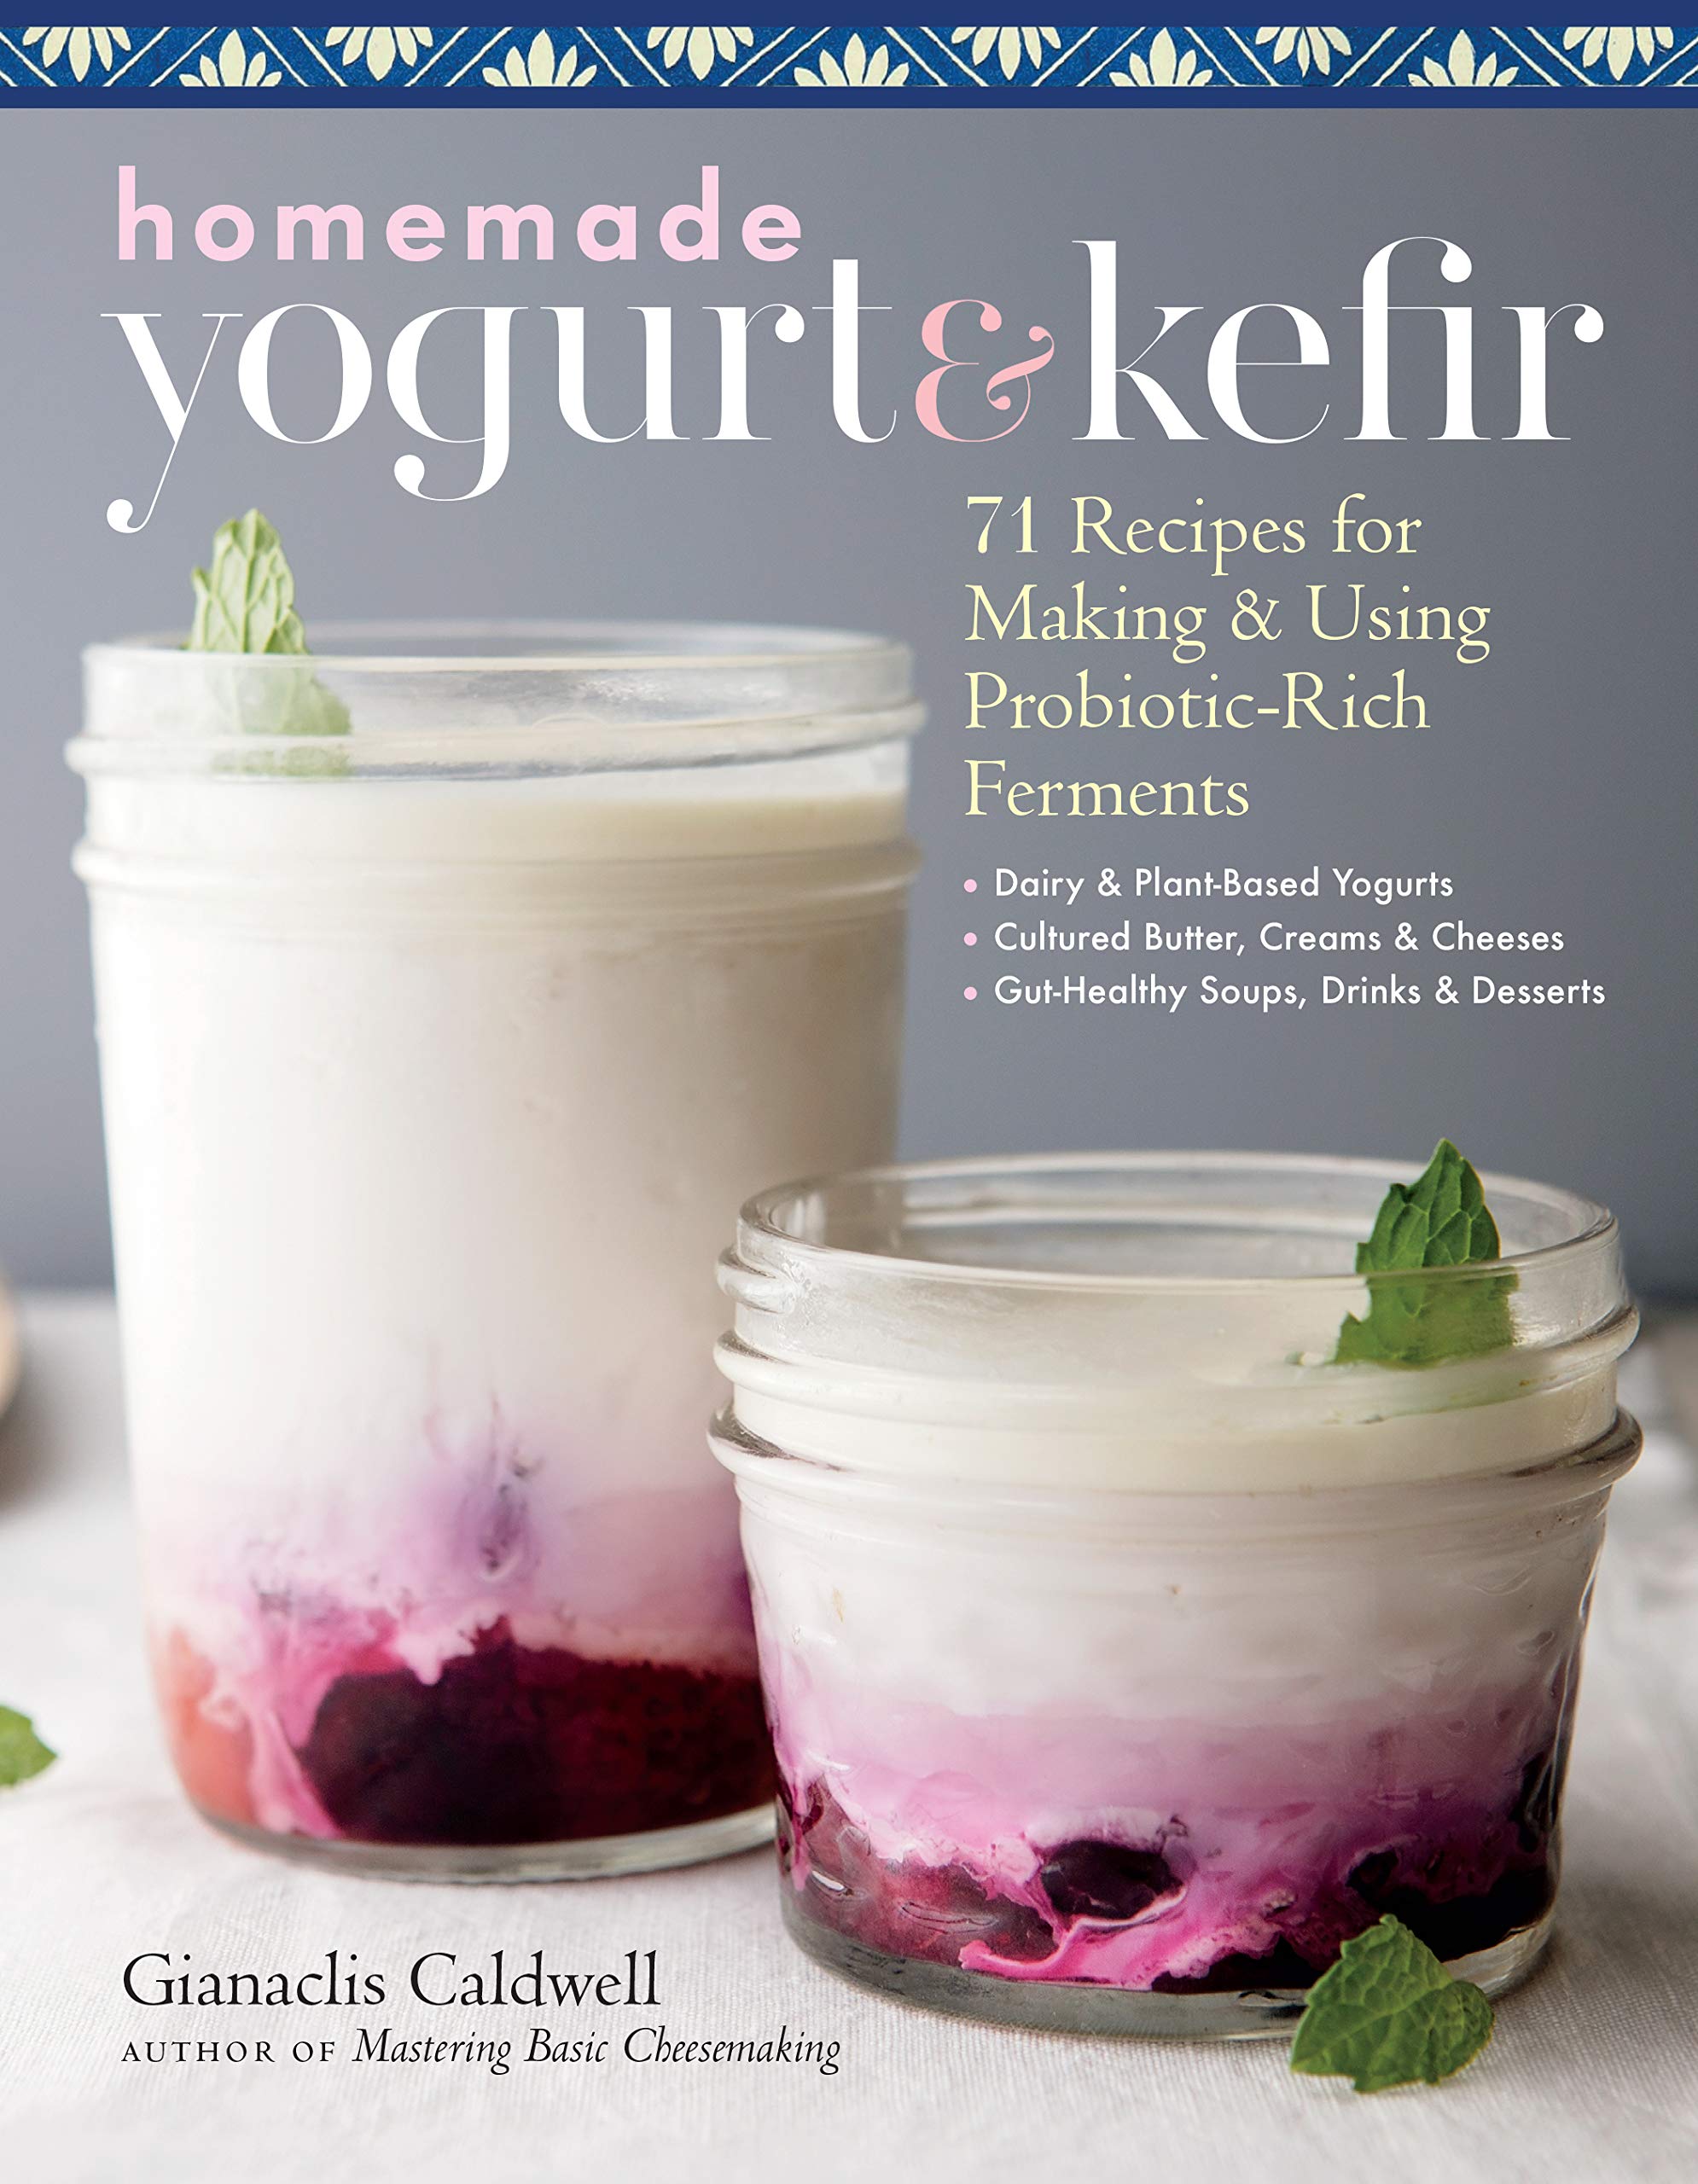 Homemade Yogurt & Kefir: 71 Recipes for Making & Using Probiotic-Rich Ferments (Gianaclis Caldwell)